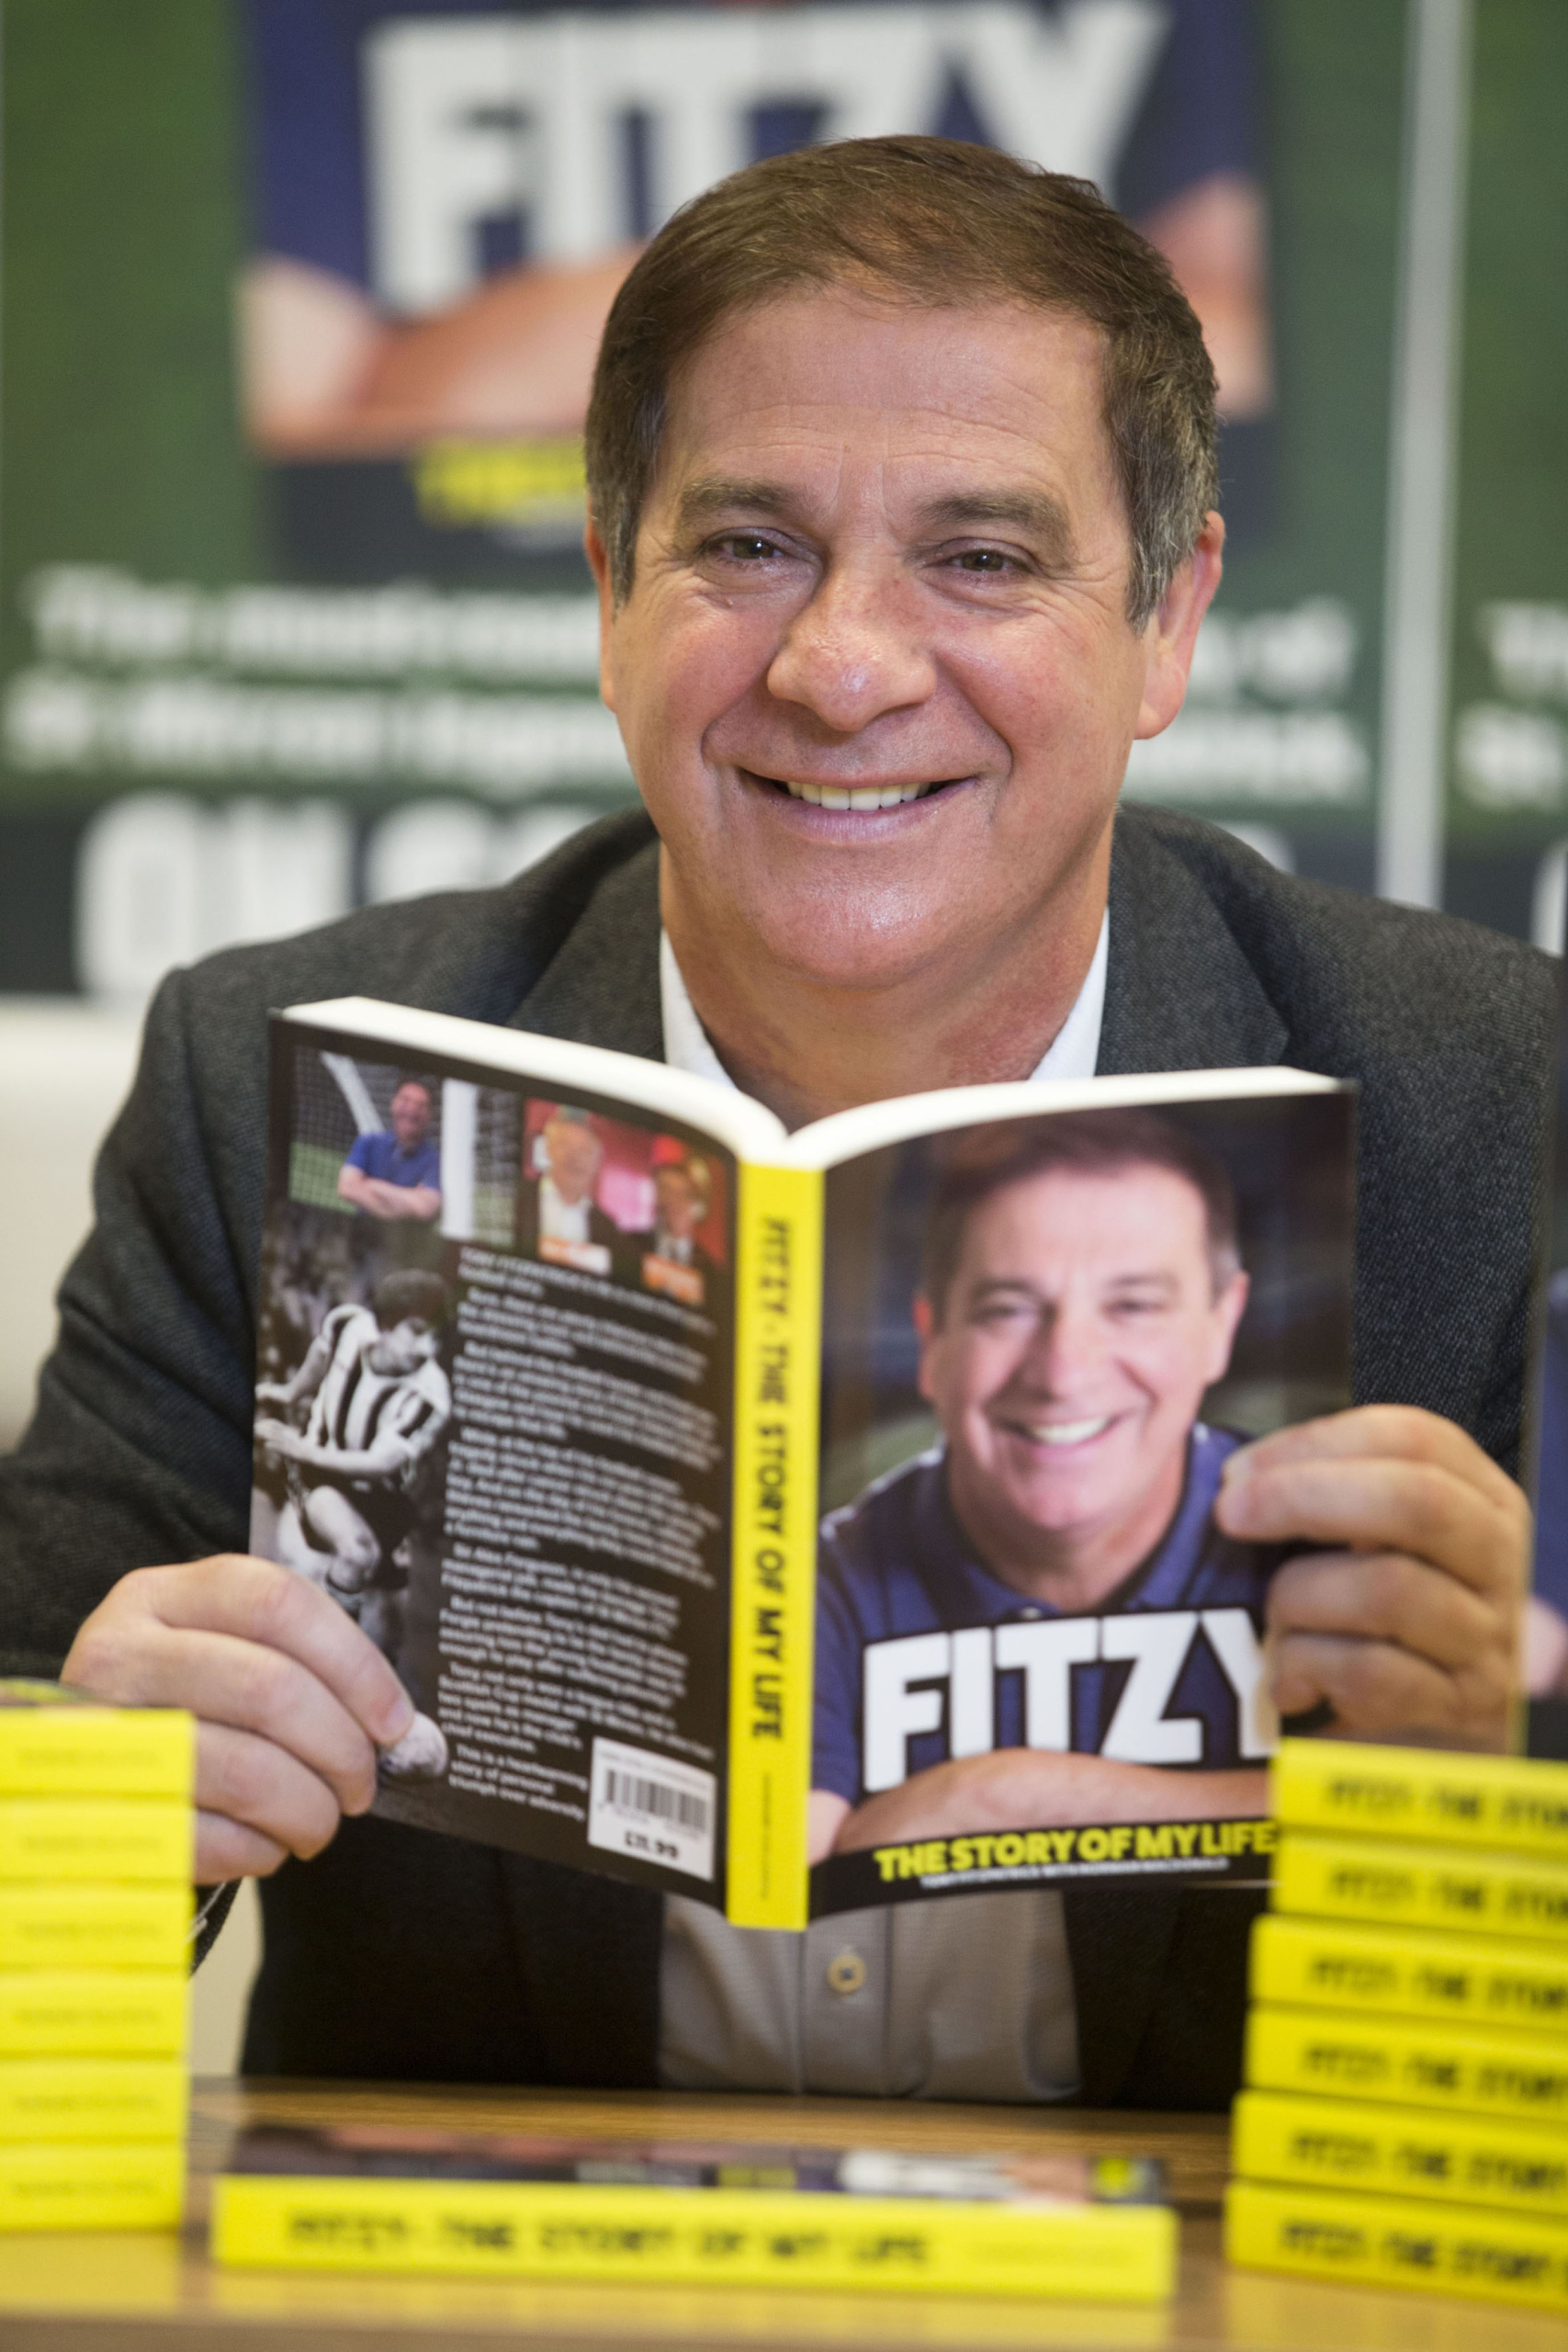 Tony Fitzpatrick book launch